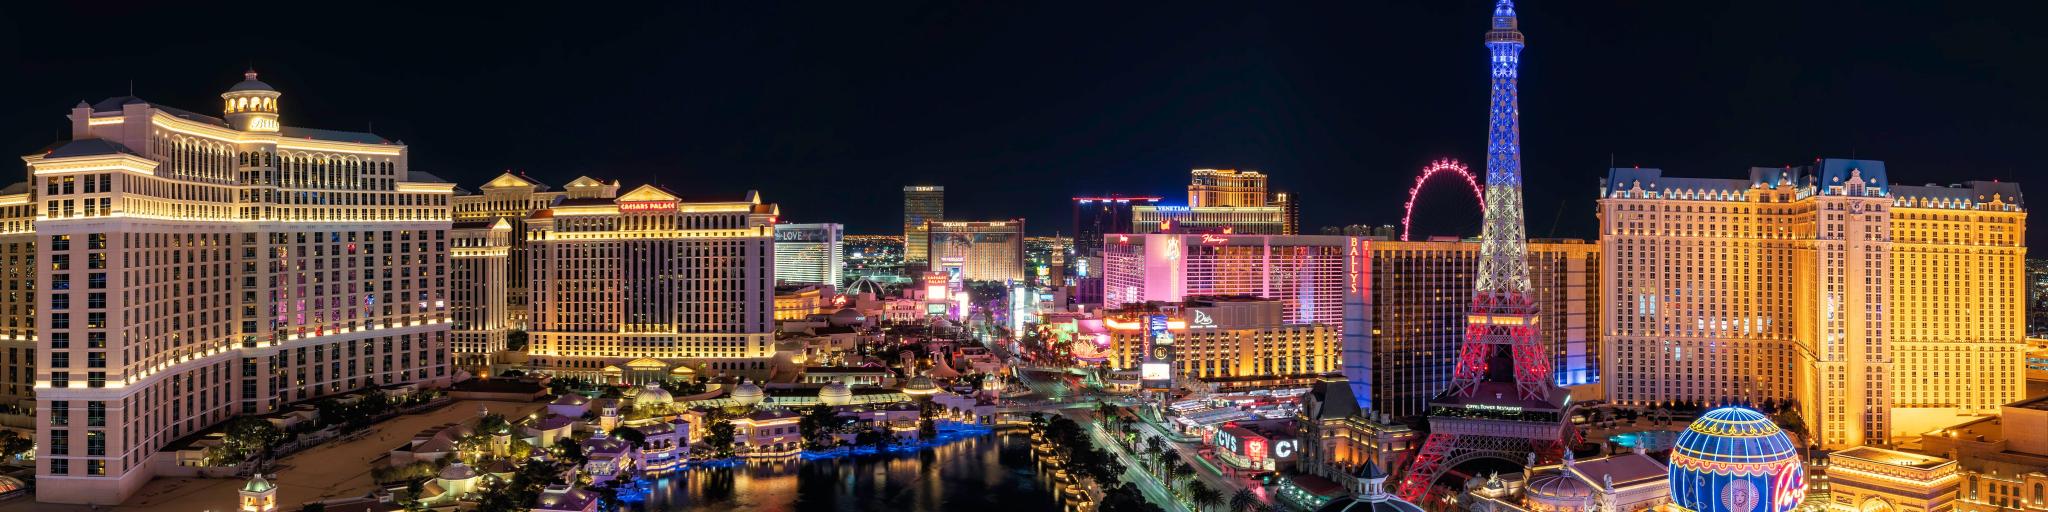 Las Vegas, Nevada, USA with a panorama wide angle view of the Las Vegas Strip and city skyline at night.